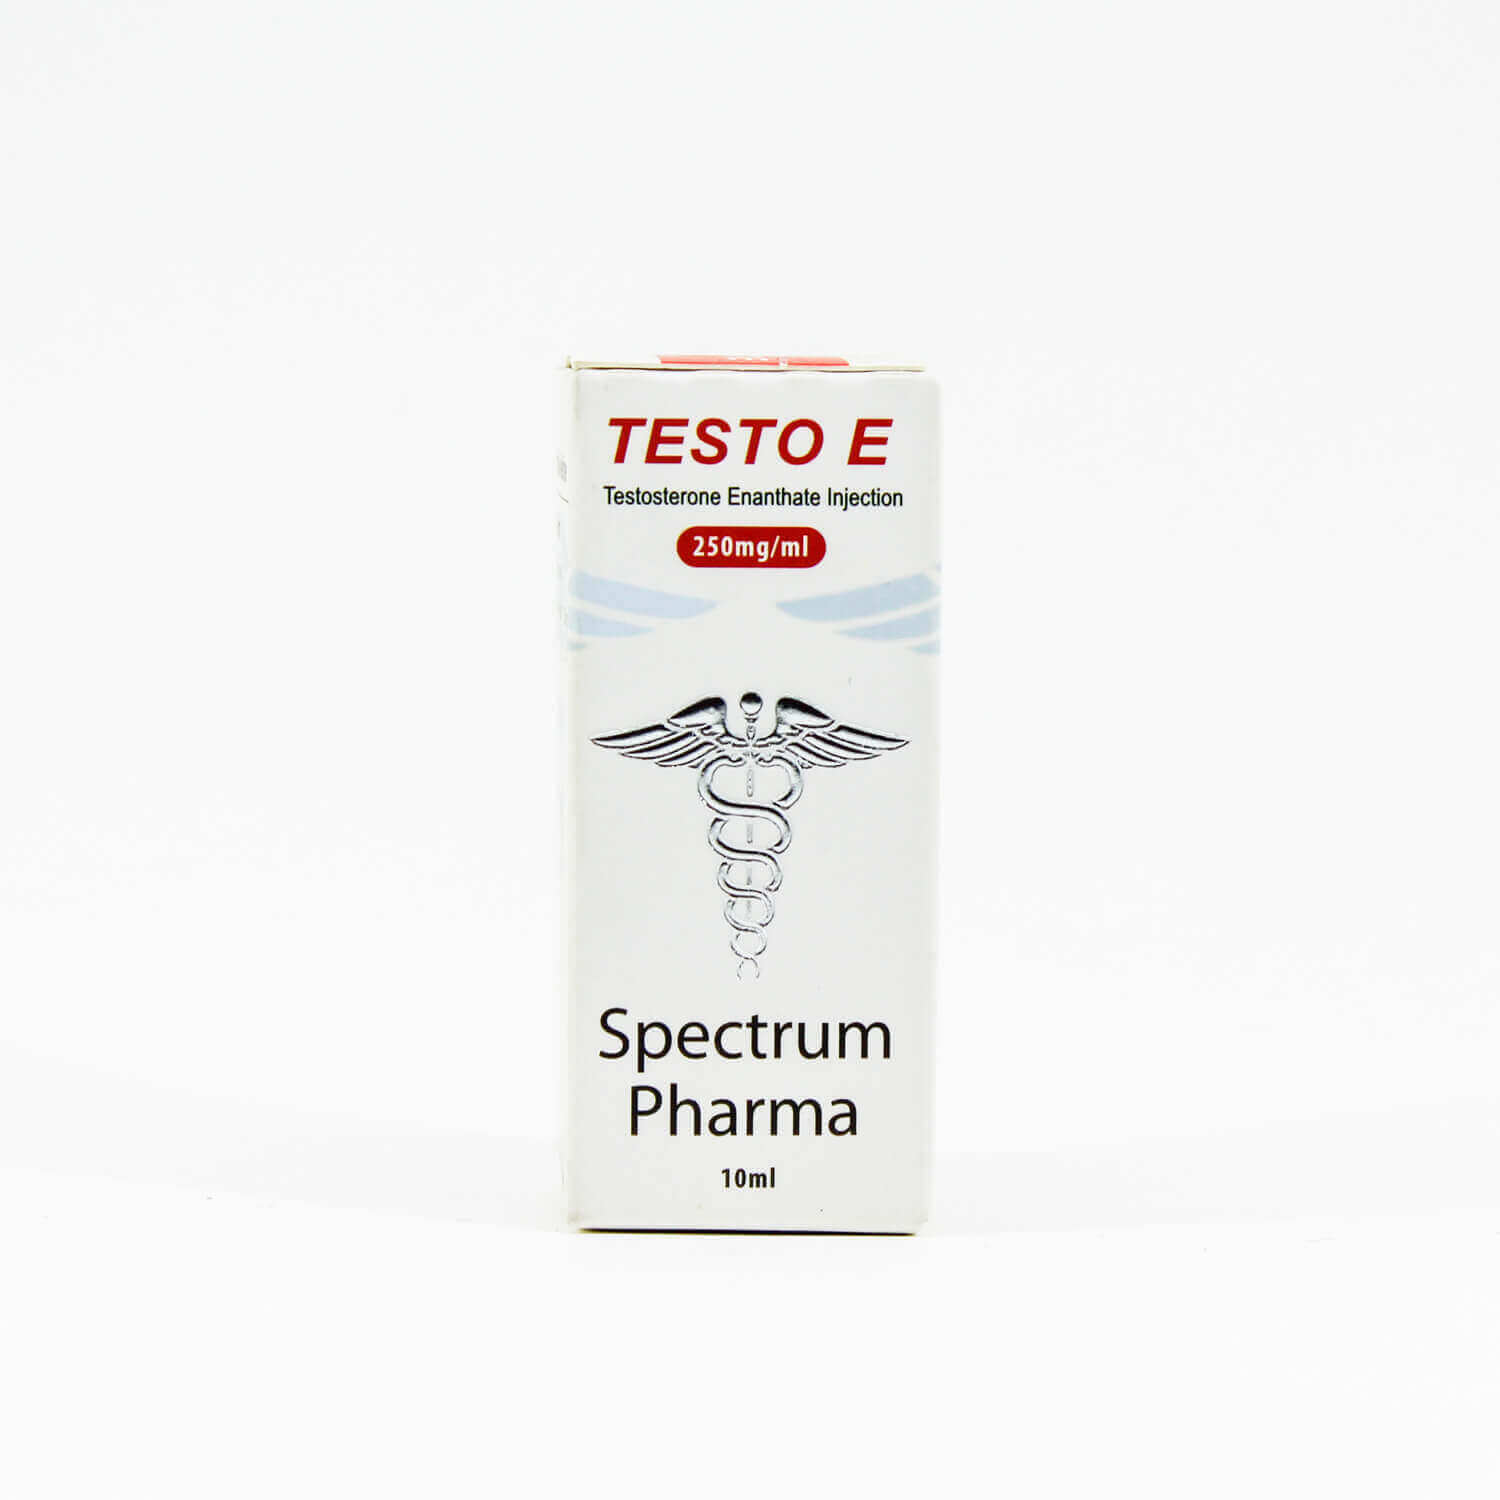 Testo E 250mg/ml Spectrum Pharma USA Domestic